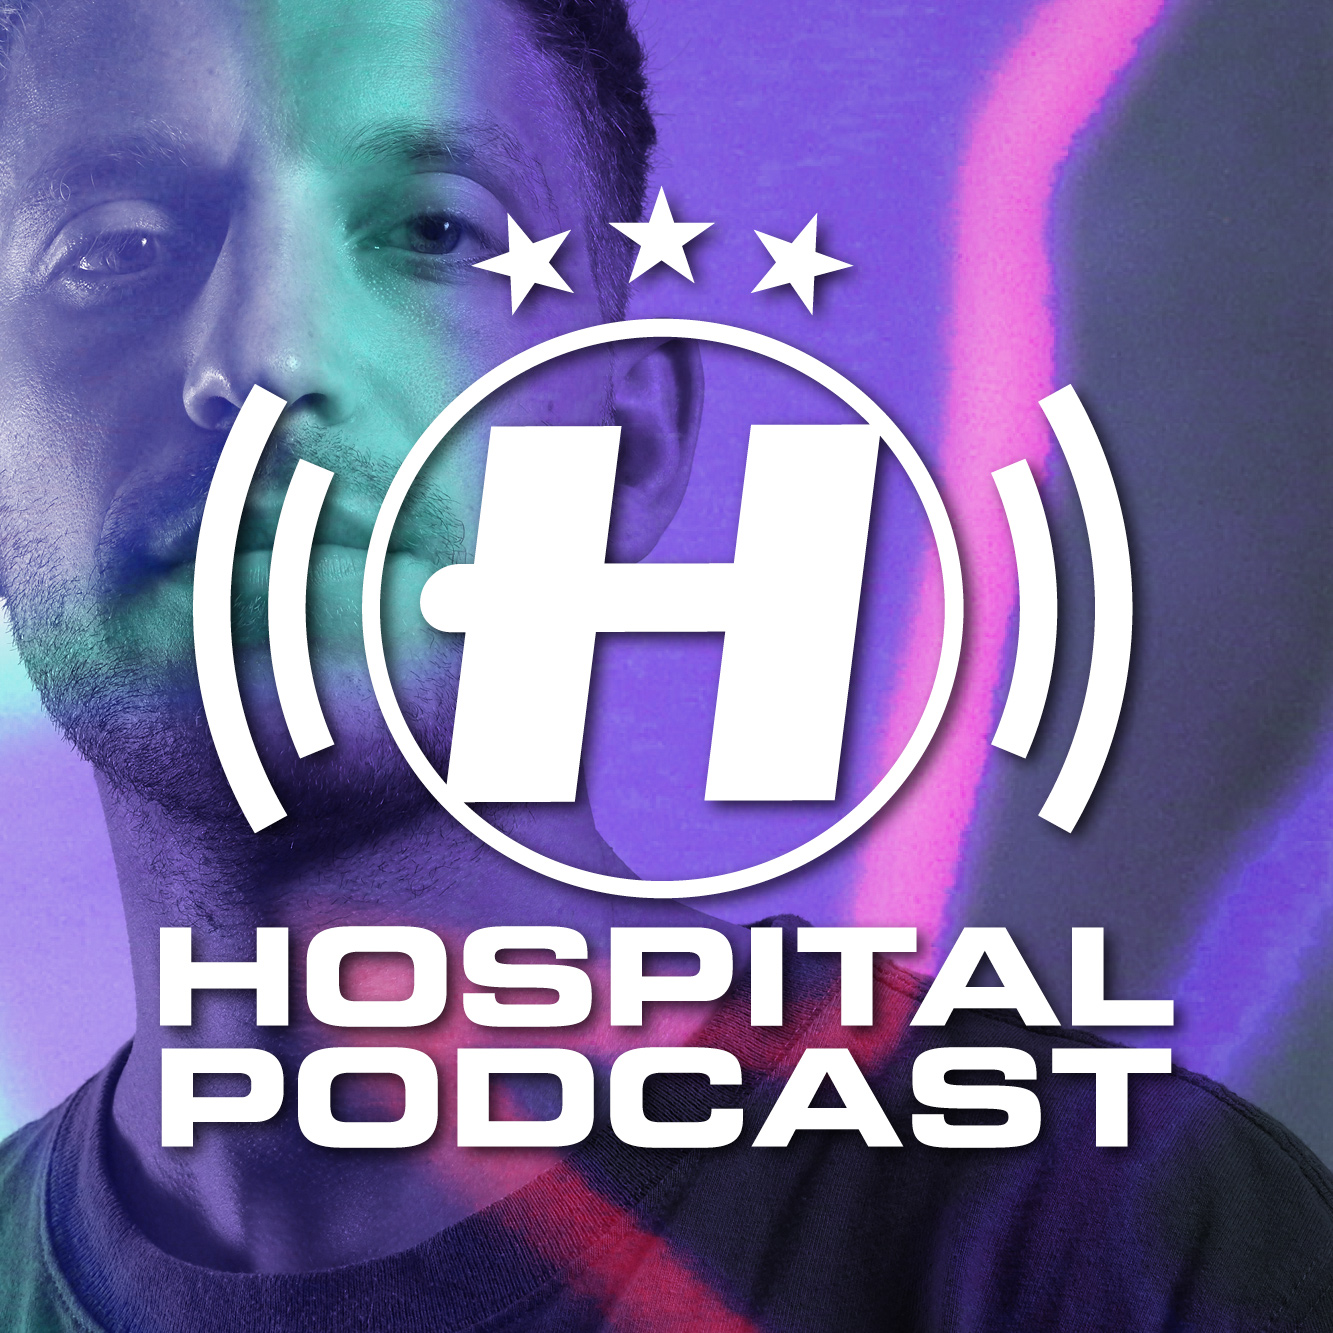 Hospital Podcast 441 with Hugh Hardie Artwork